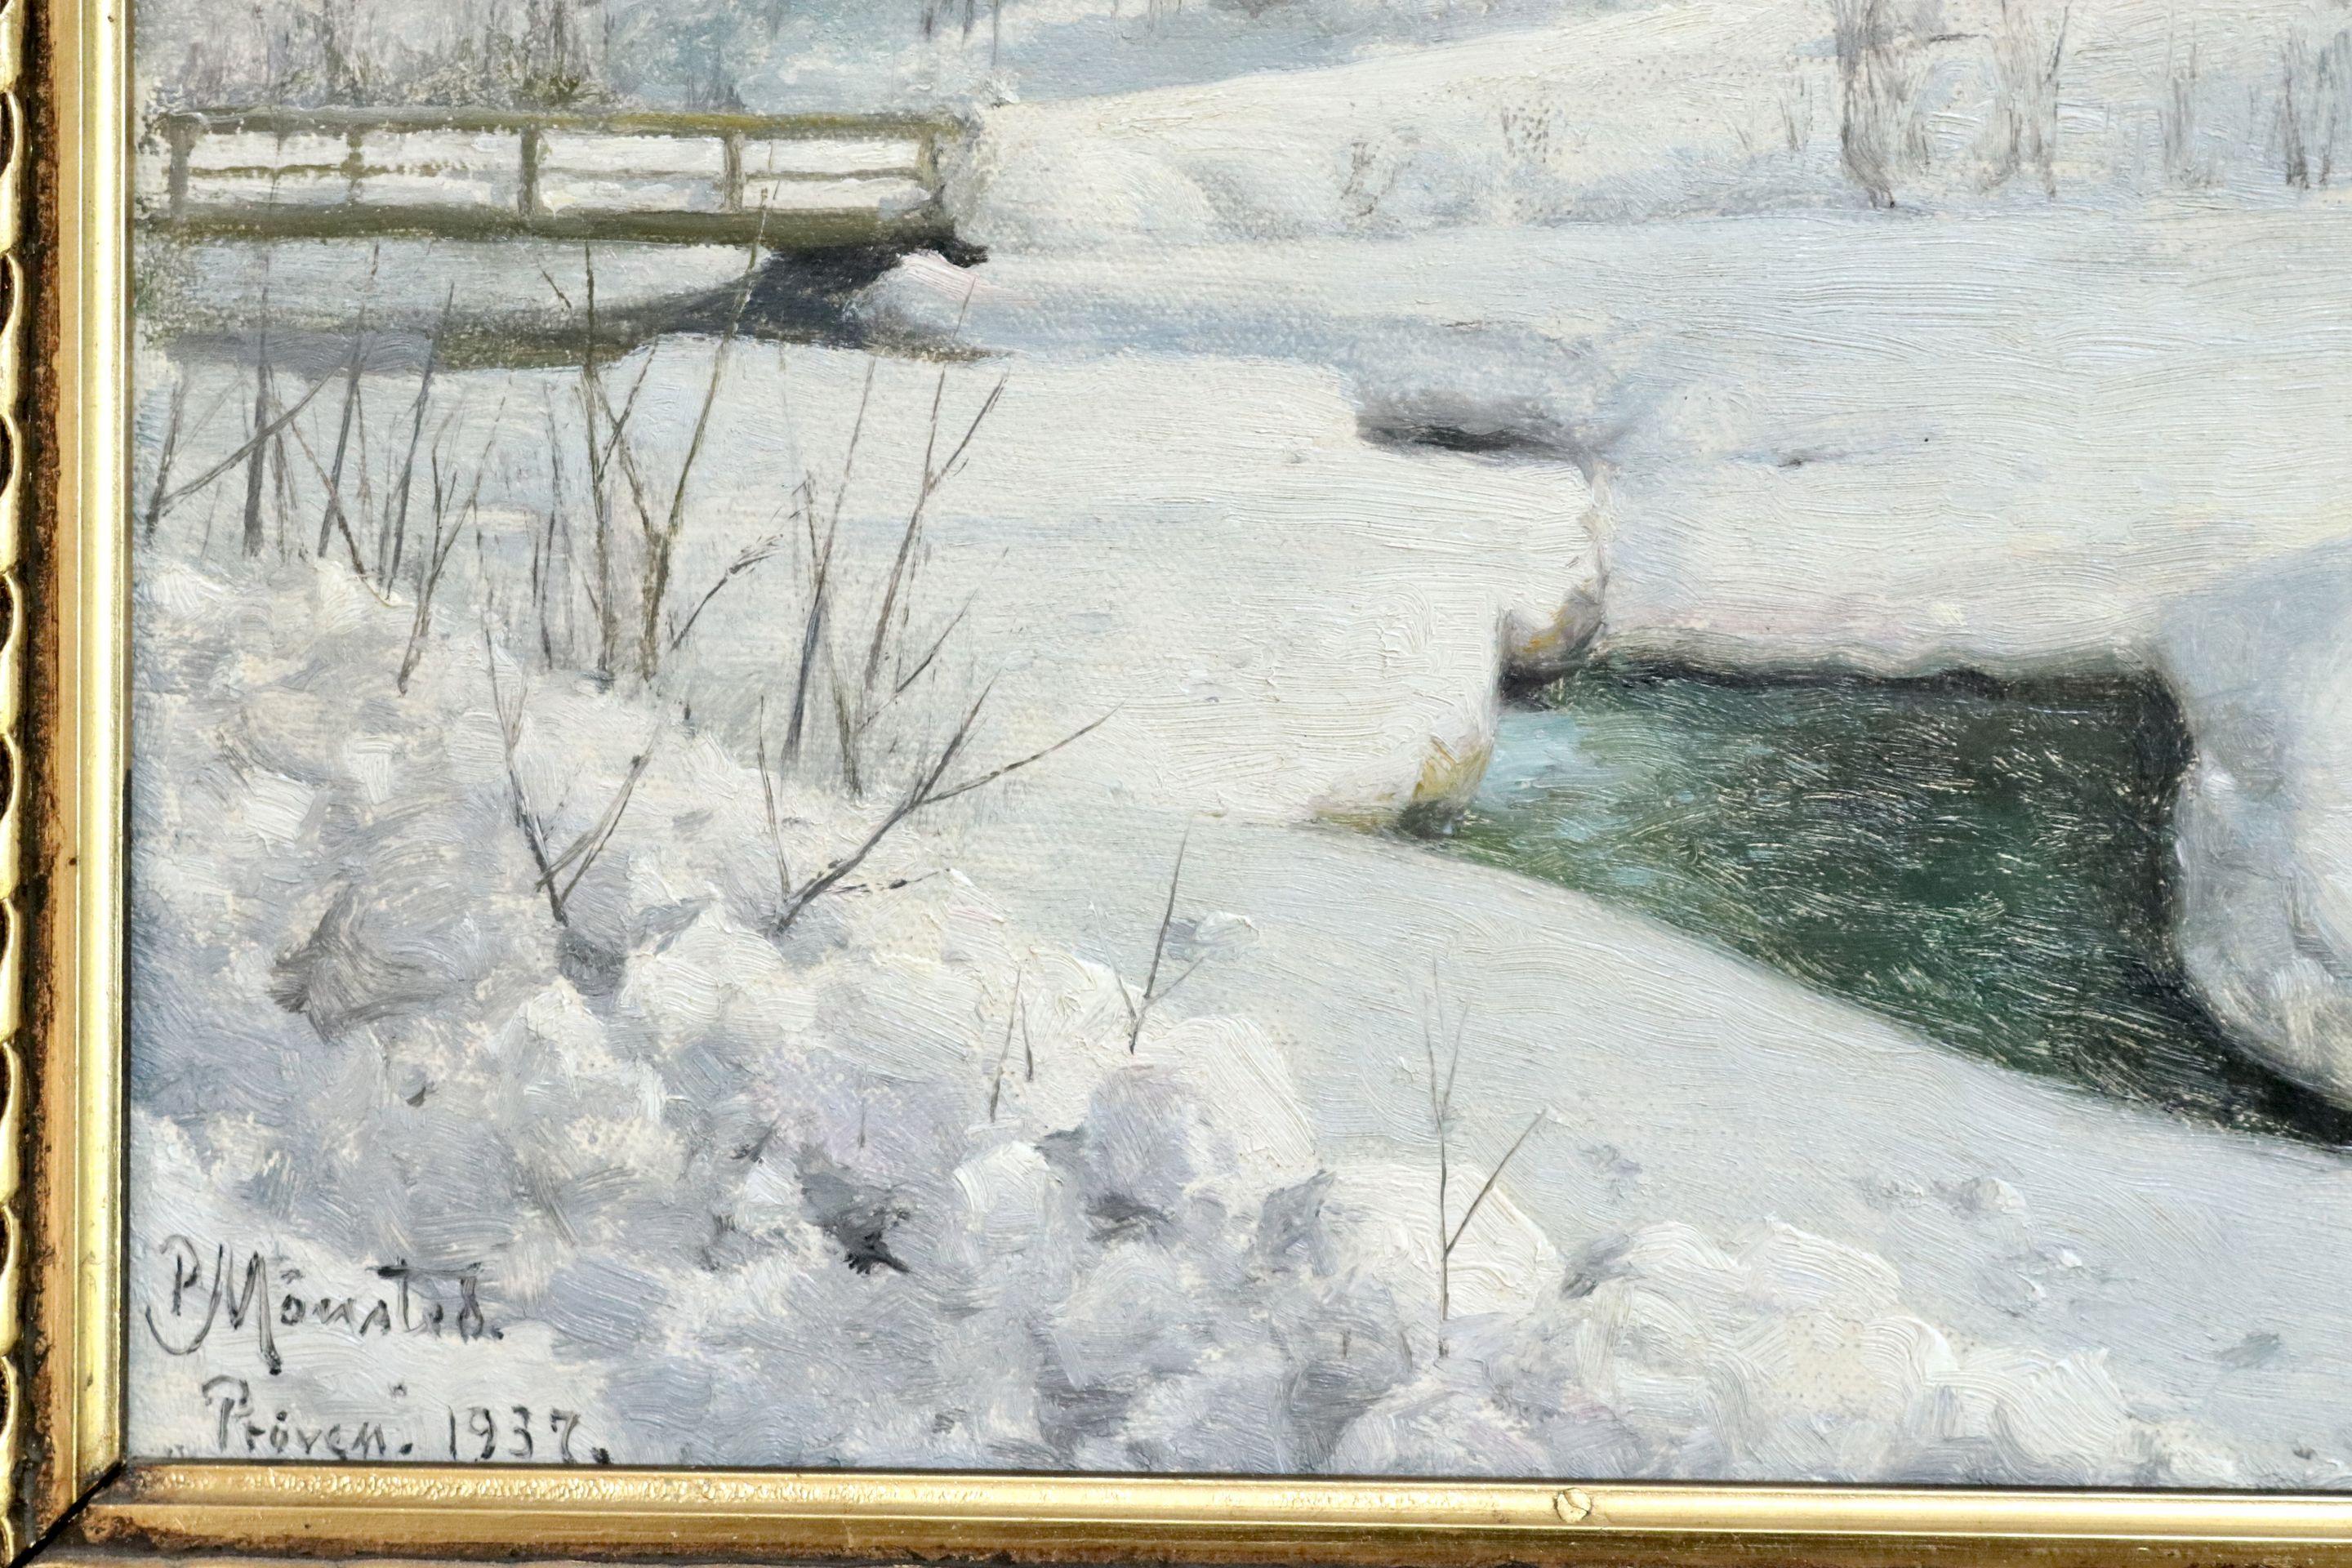 Hundselven, Norway - Winter - 20th Century Oil, Snow Landscape by Peder Monsted - Realist Painting by Peder Mørk Mønsted